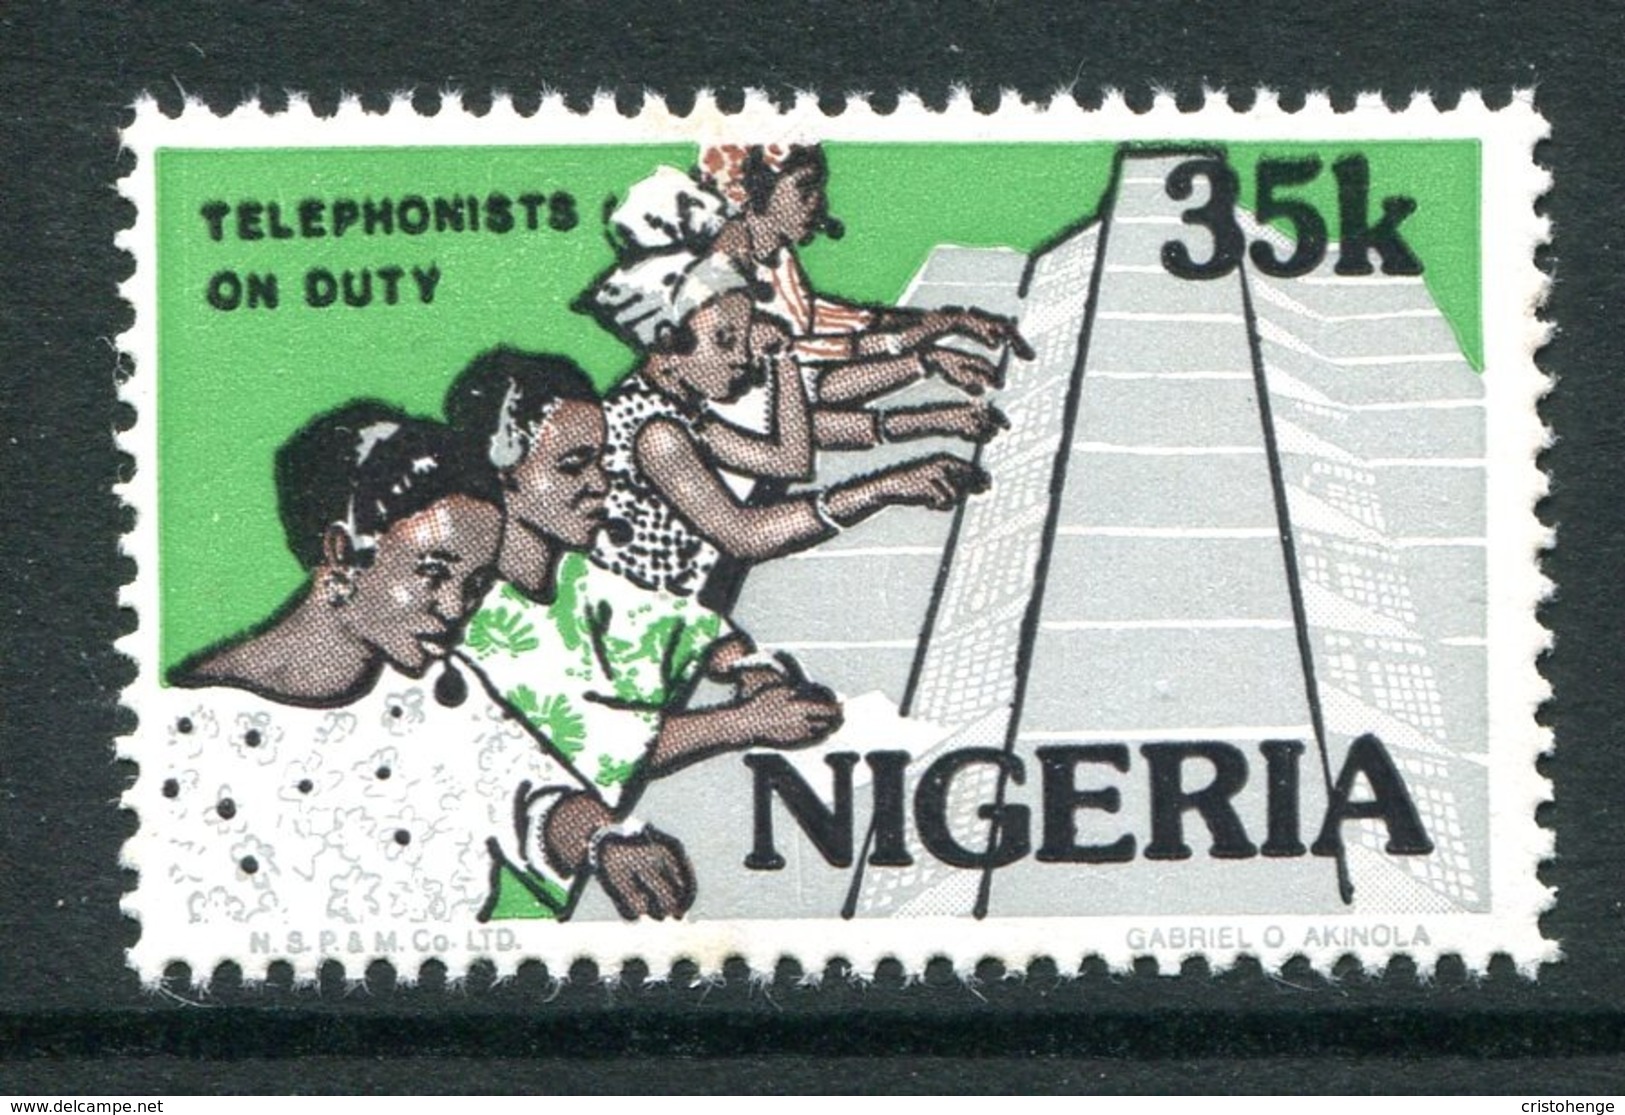 Nigeria 1986-98 Nigerian Life - 35k Telephonists Operating Switchboard MNH (SG 520) - Nigeria (1961-...)